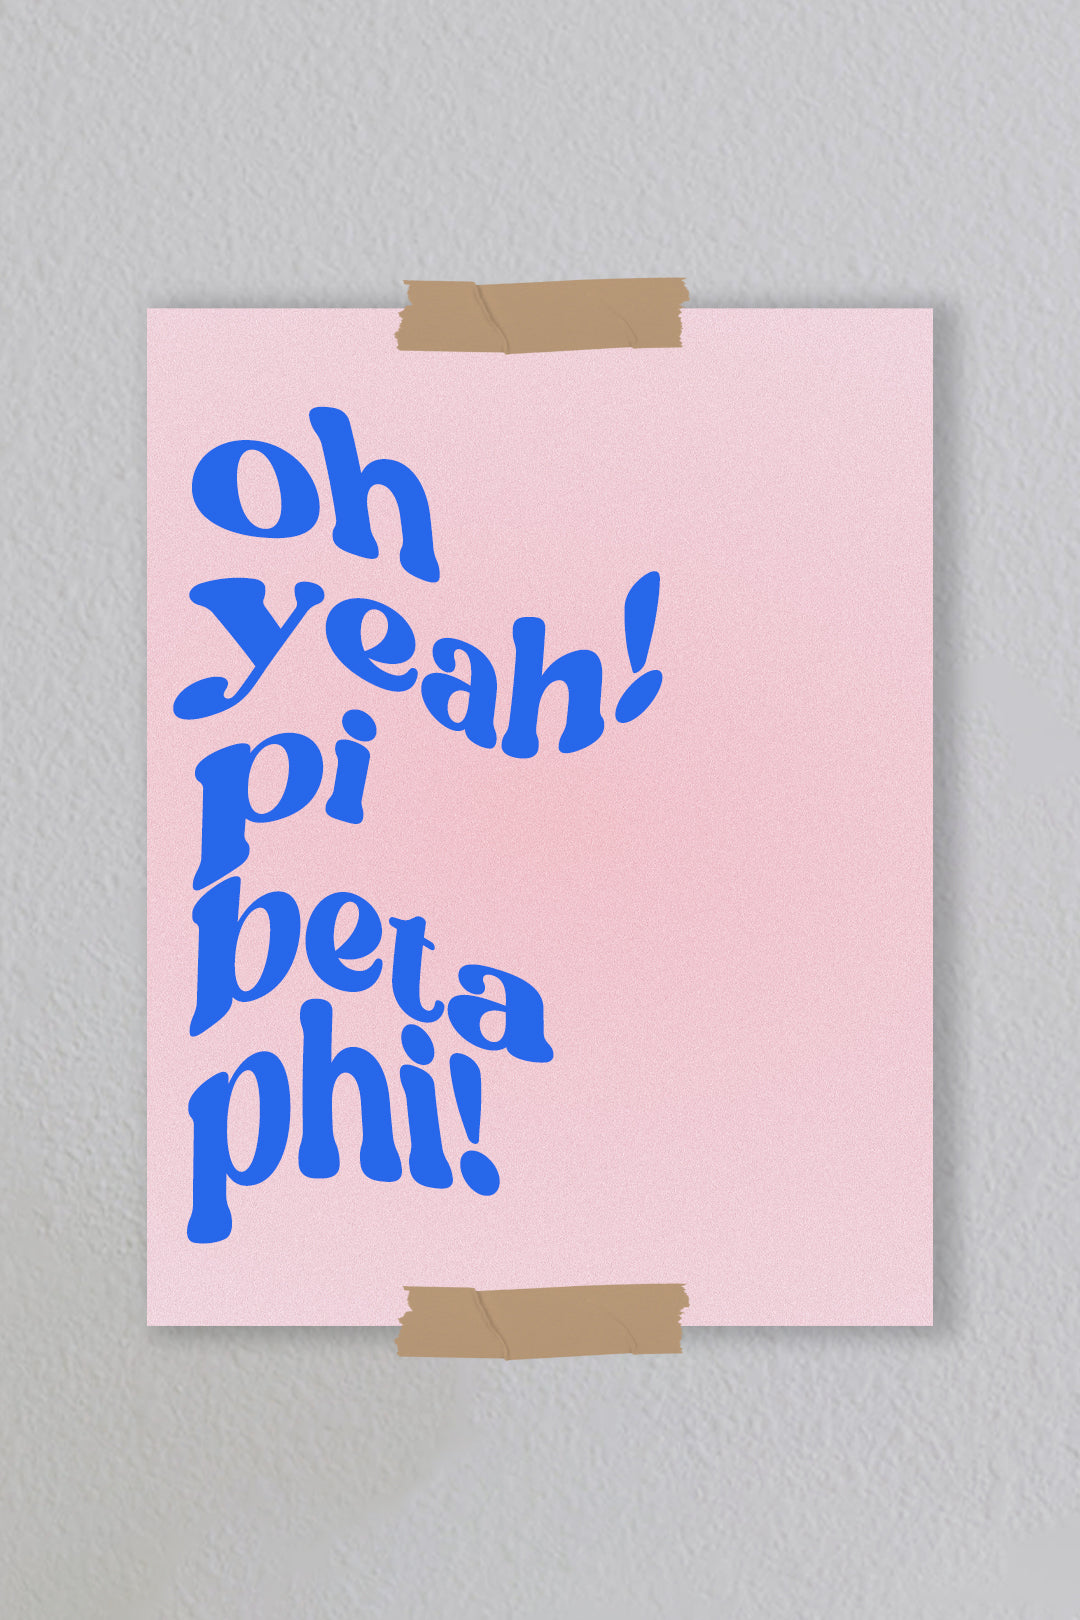 Pi Beta Phi - Art Print #11 (8.5x11)